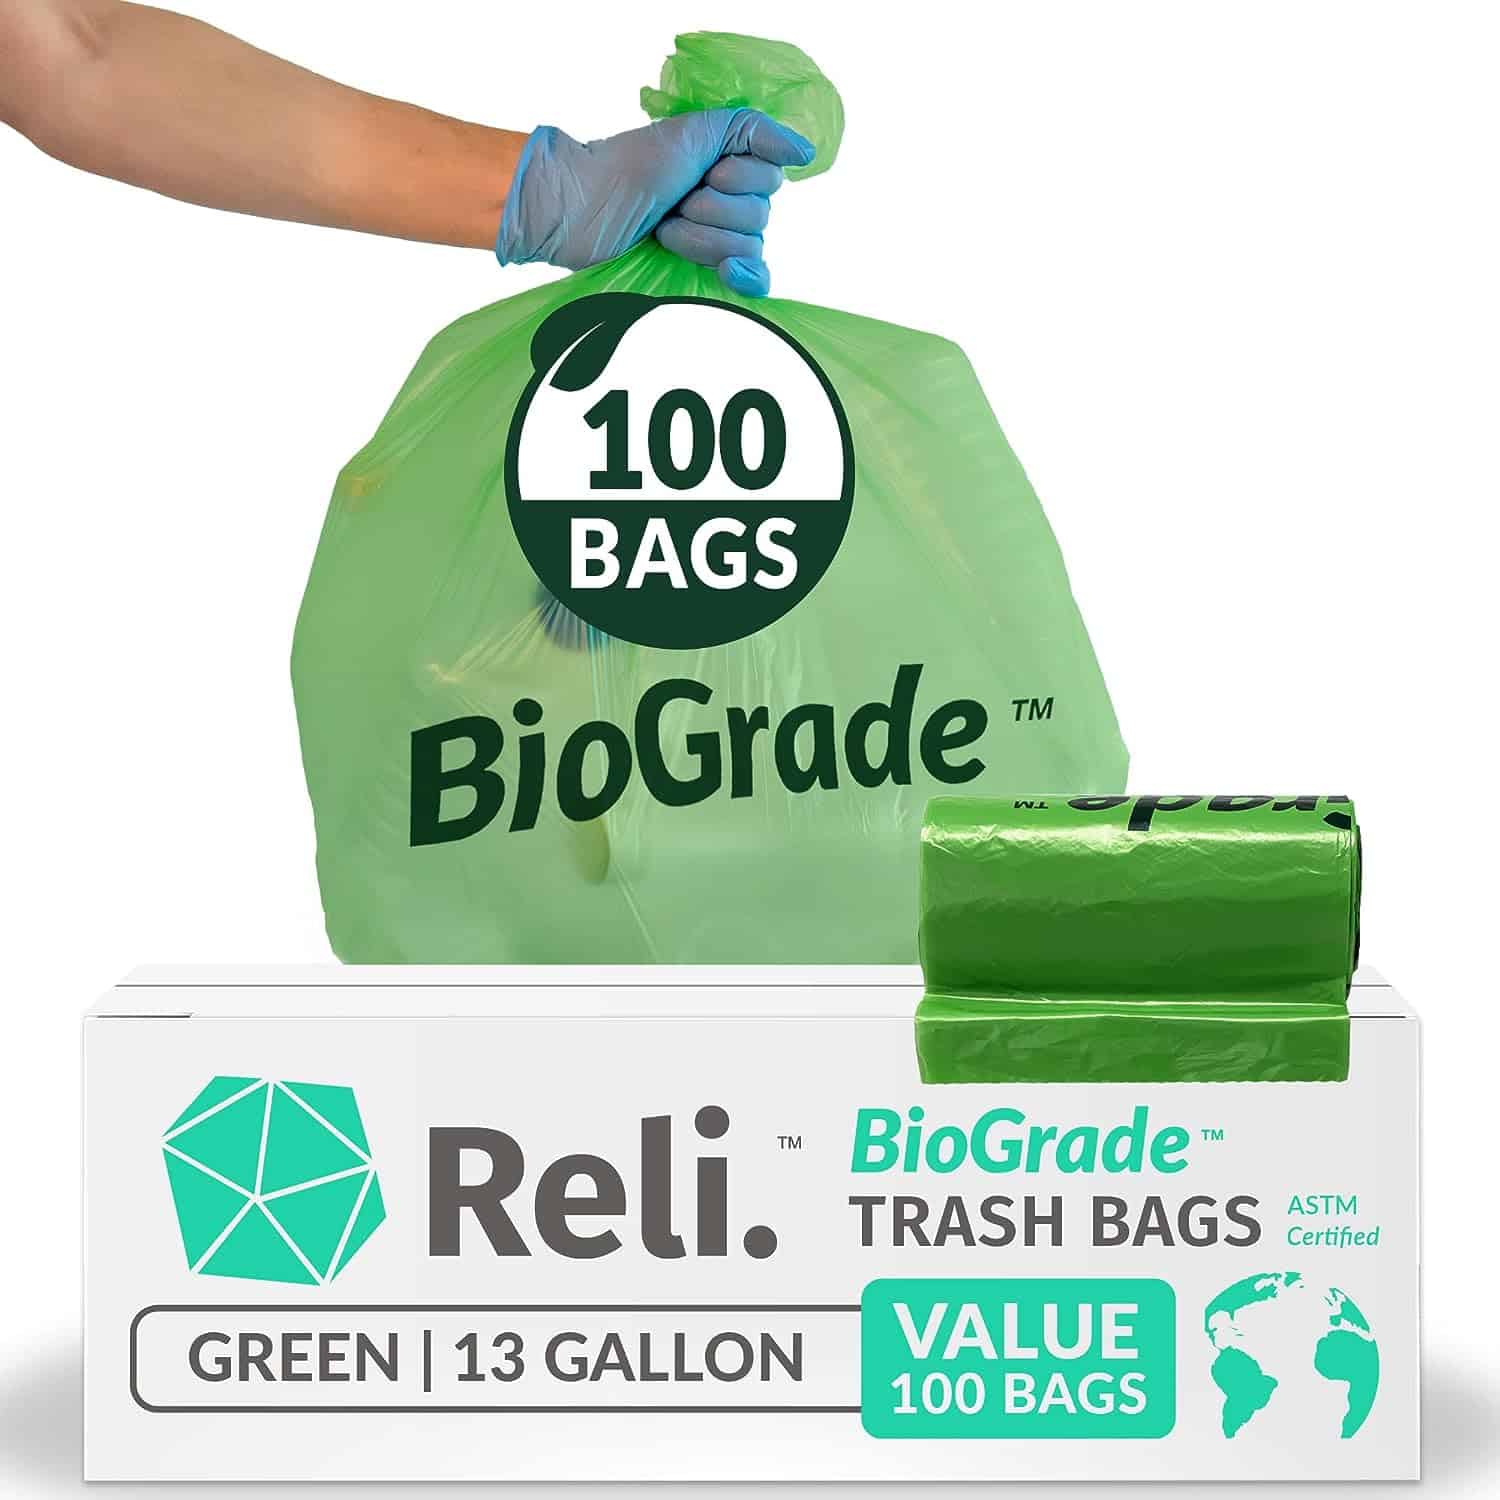 Reli. Biodegradable 13 Gallon Trash Bags Review